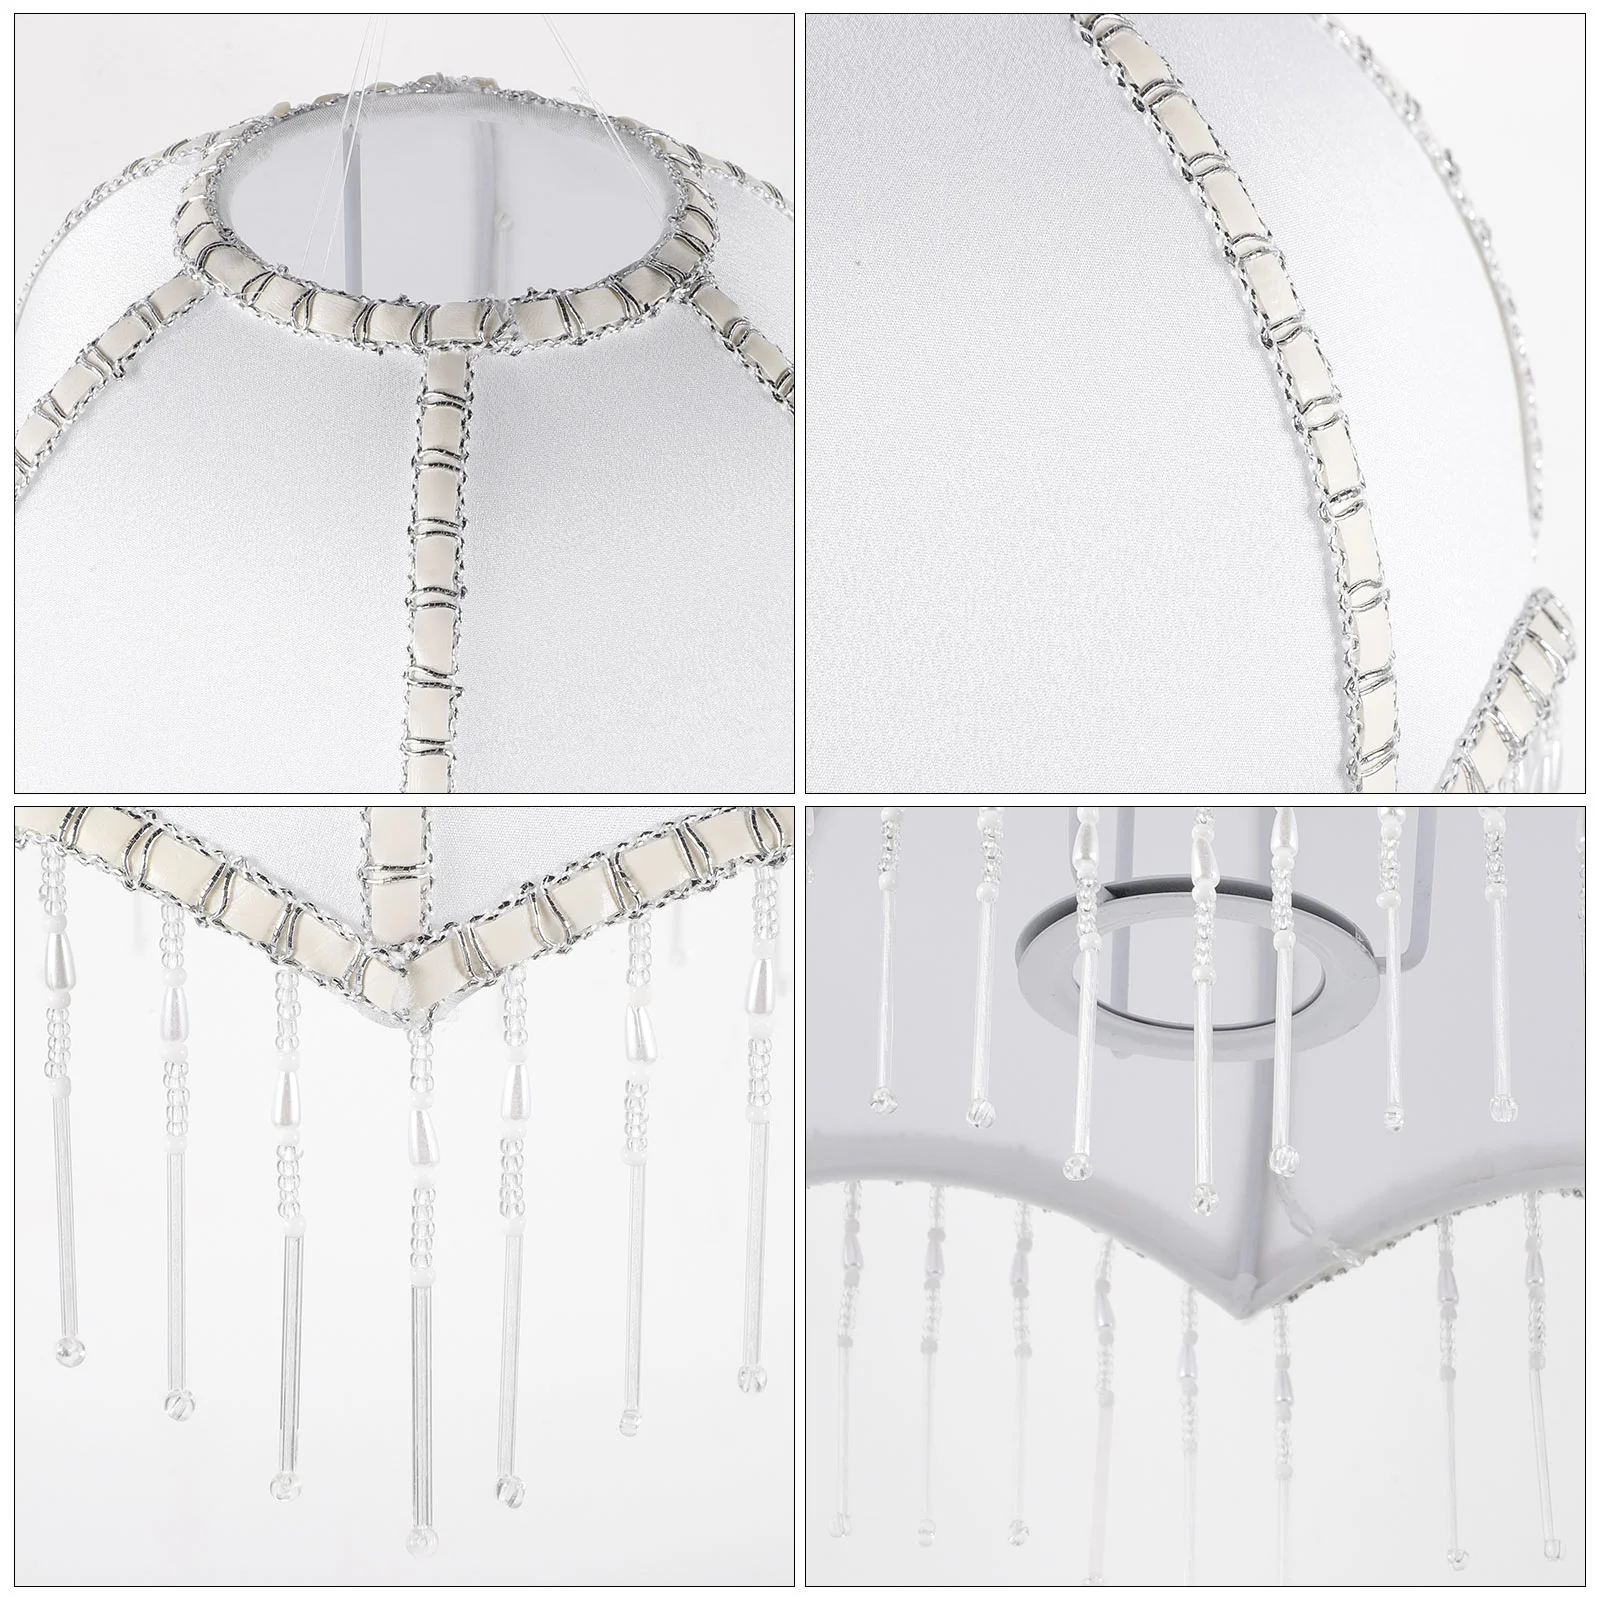 Абажур в форме зонтика, световая крышка, винтажный абажур, бытовая лампа, комплект поставки ламп - 3